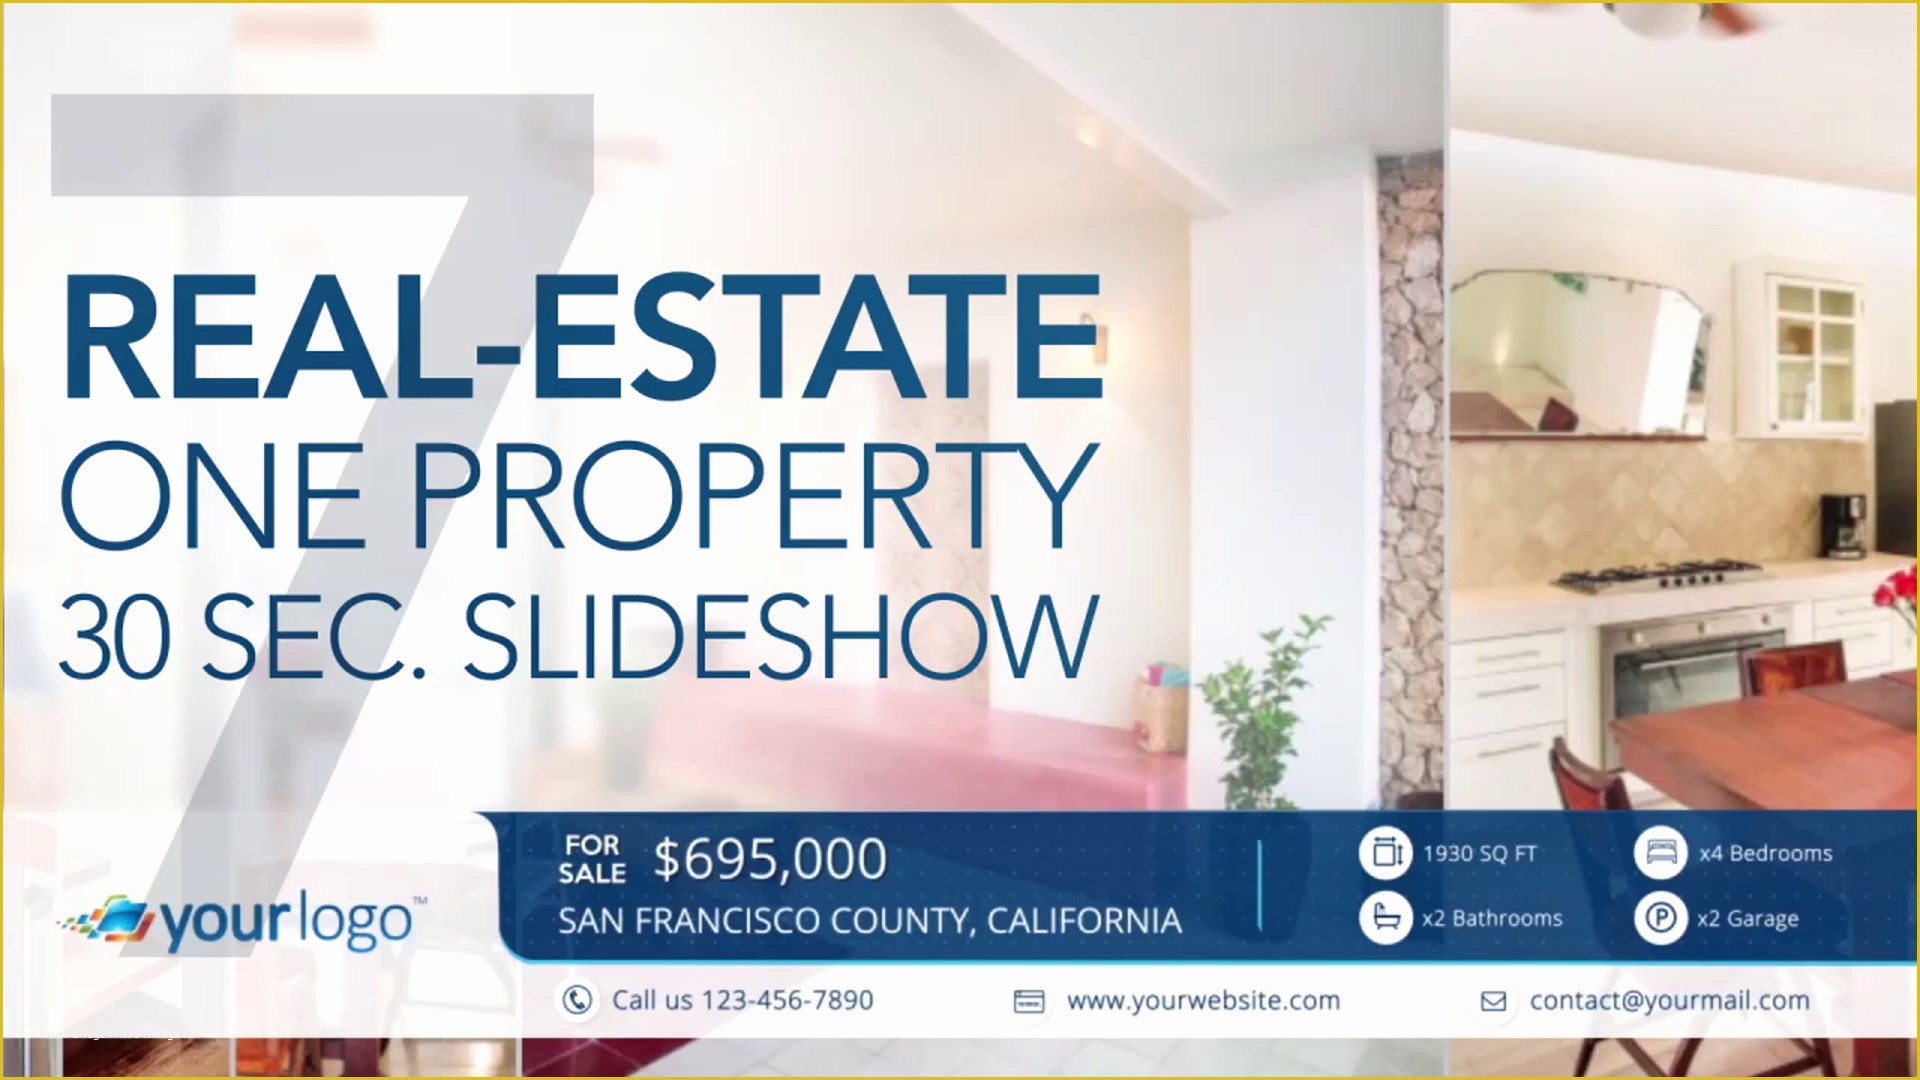 Final Cut Pro Photo Slideshow Template Free Of Real Estate E Property 30s Slideshow 7 Apple Motion